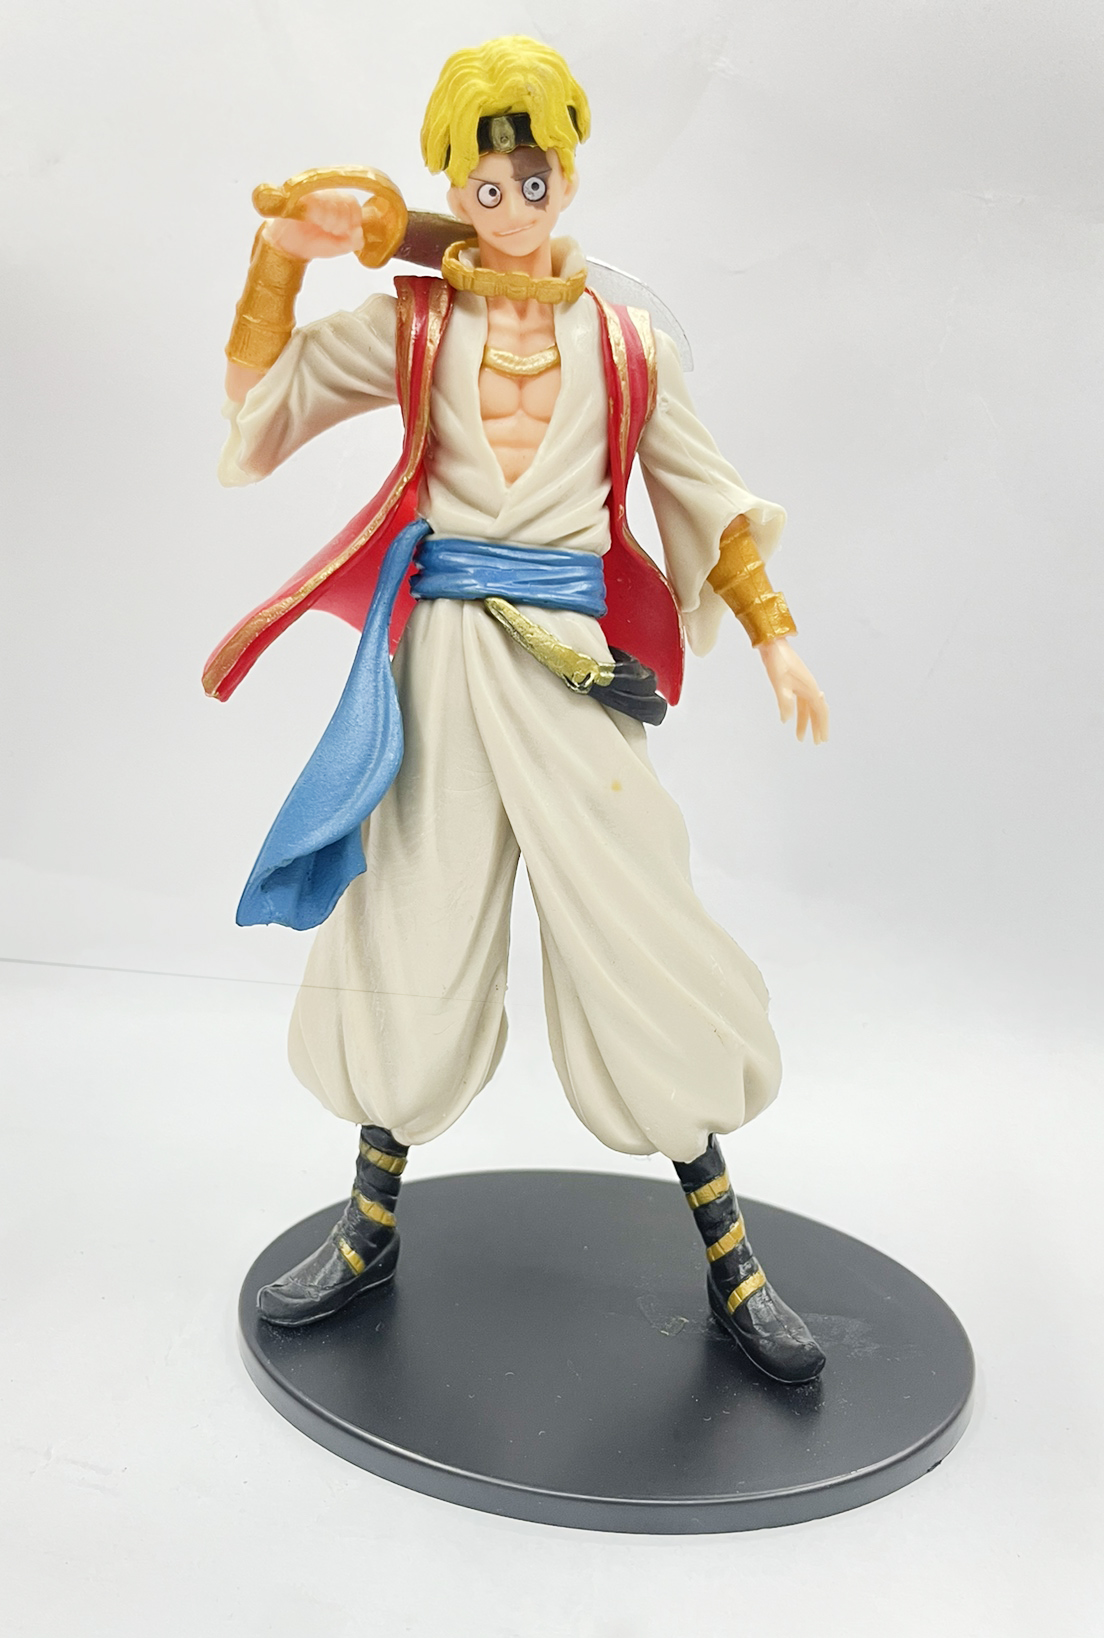 Premium Quality Exclusive PVC One Piece Anime Sabo Action Figure